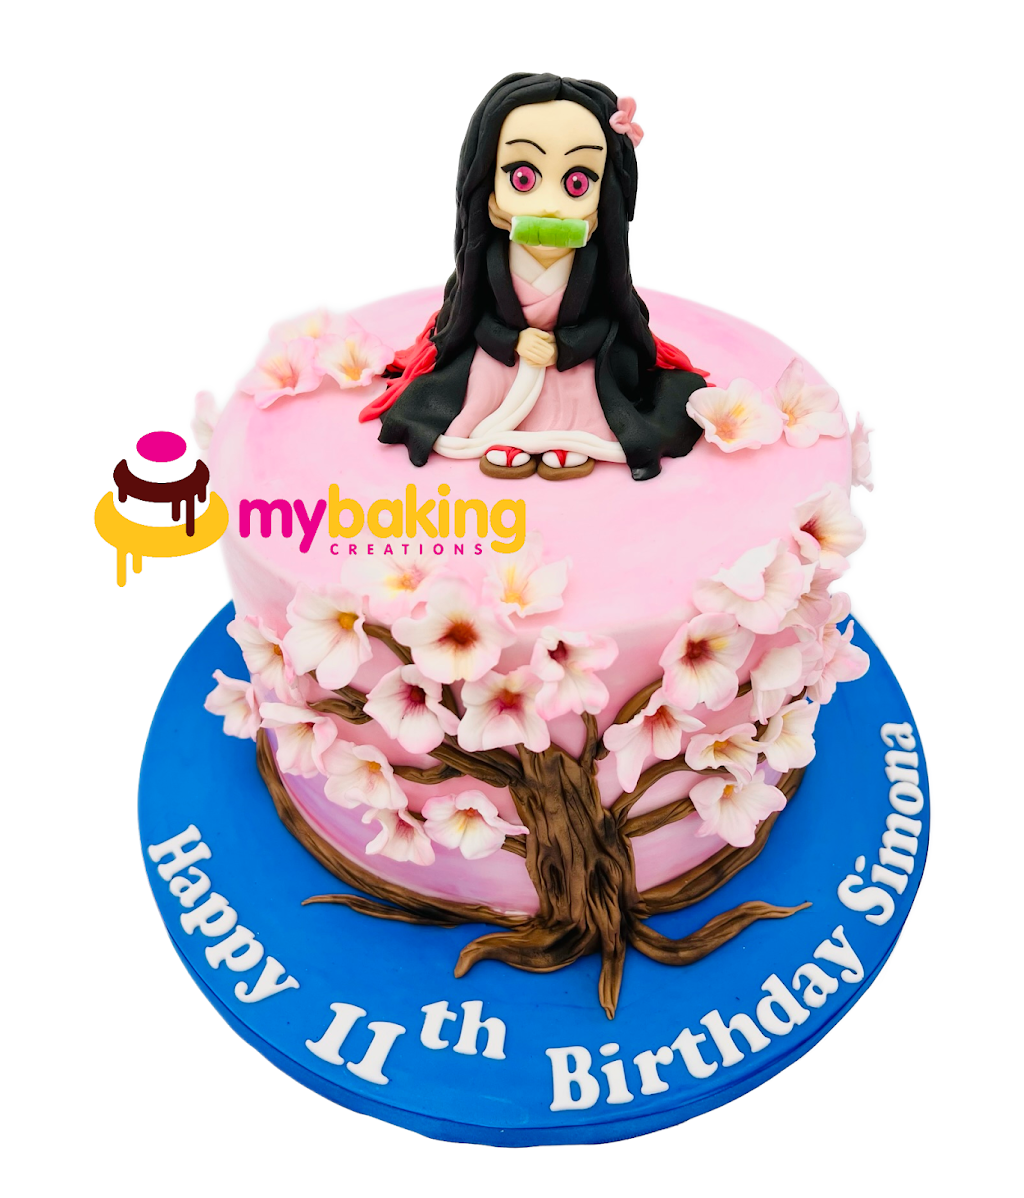 My Baking Creations (Best Custom Cakes) | 1096 Wildwood Ave, Daly City, CA 94015 | Phone: (415) 632-8008